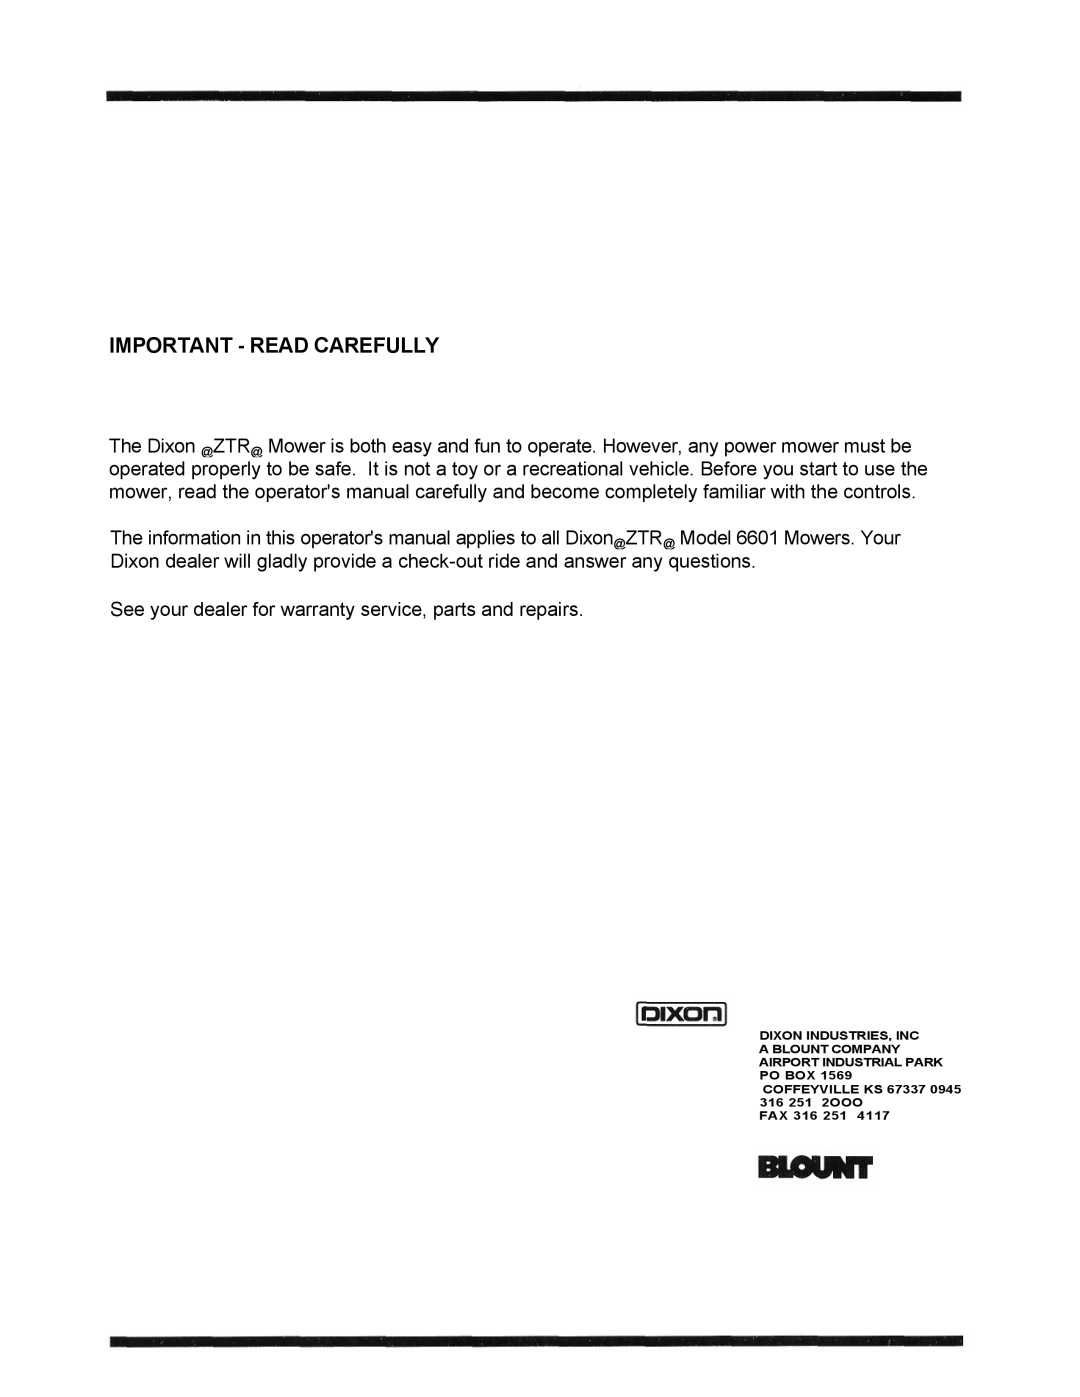 Dixon 6601 Series manual Important - Read Carefully, Fax 